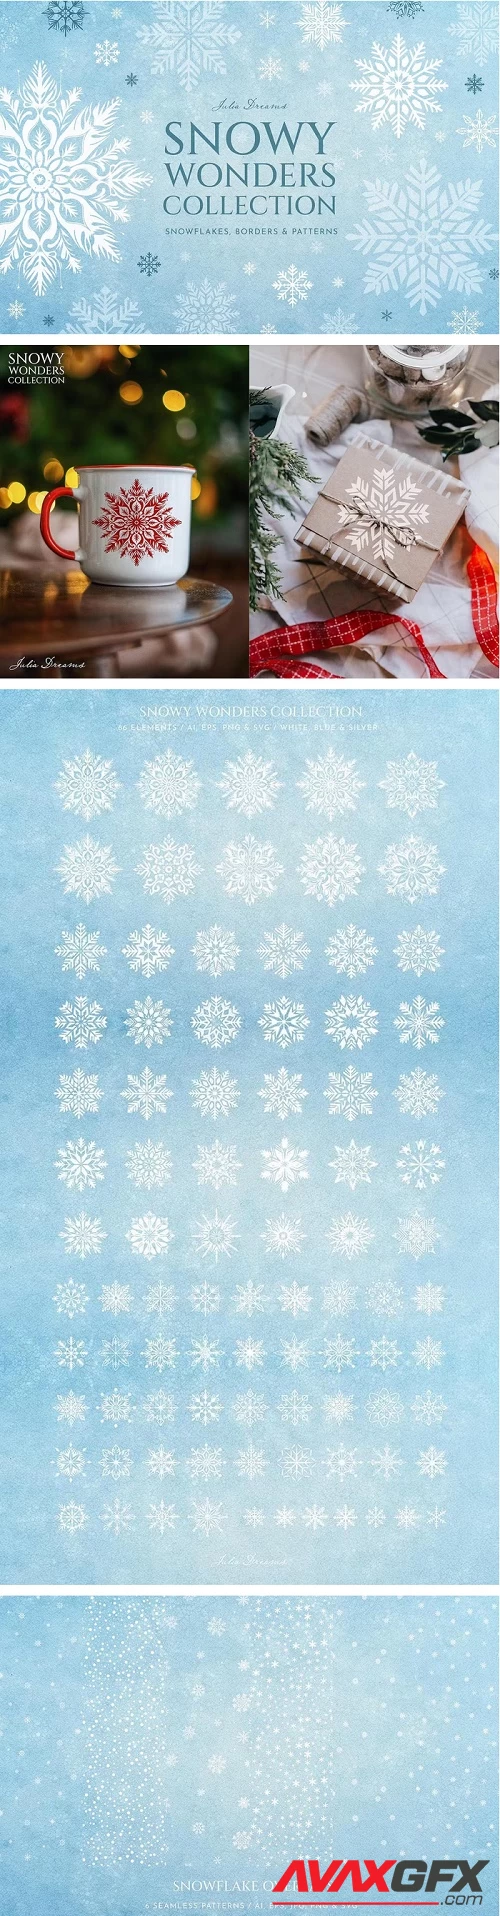 Snowy Wonders Snowflakes Vector Elements - UPLT7MW